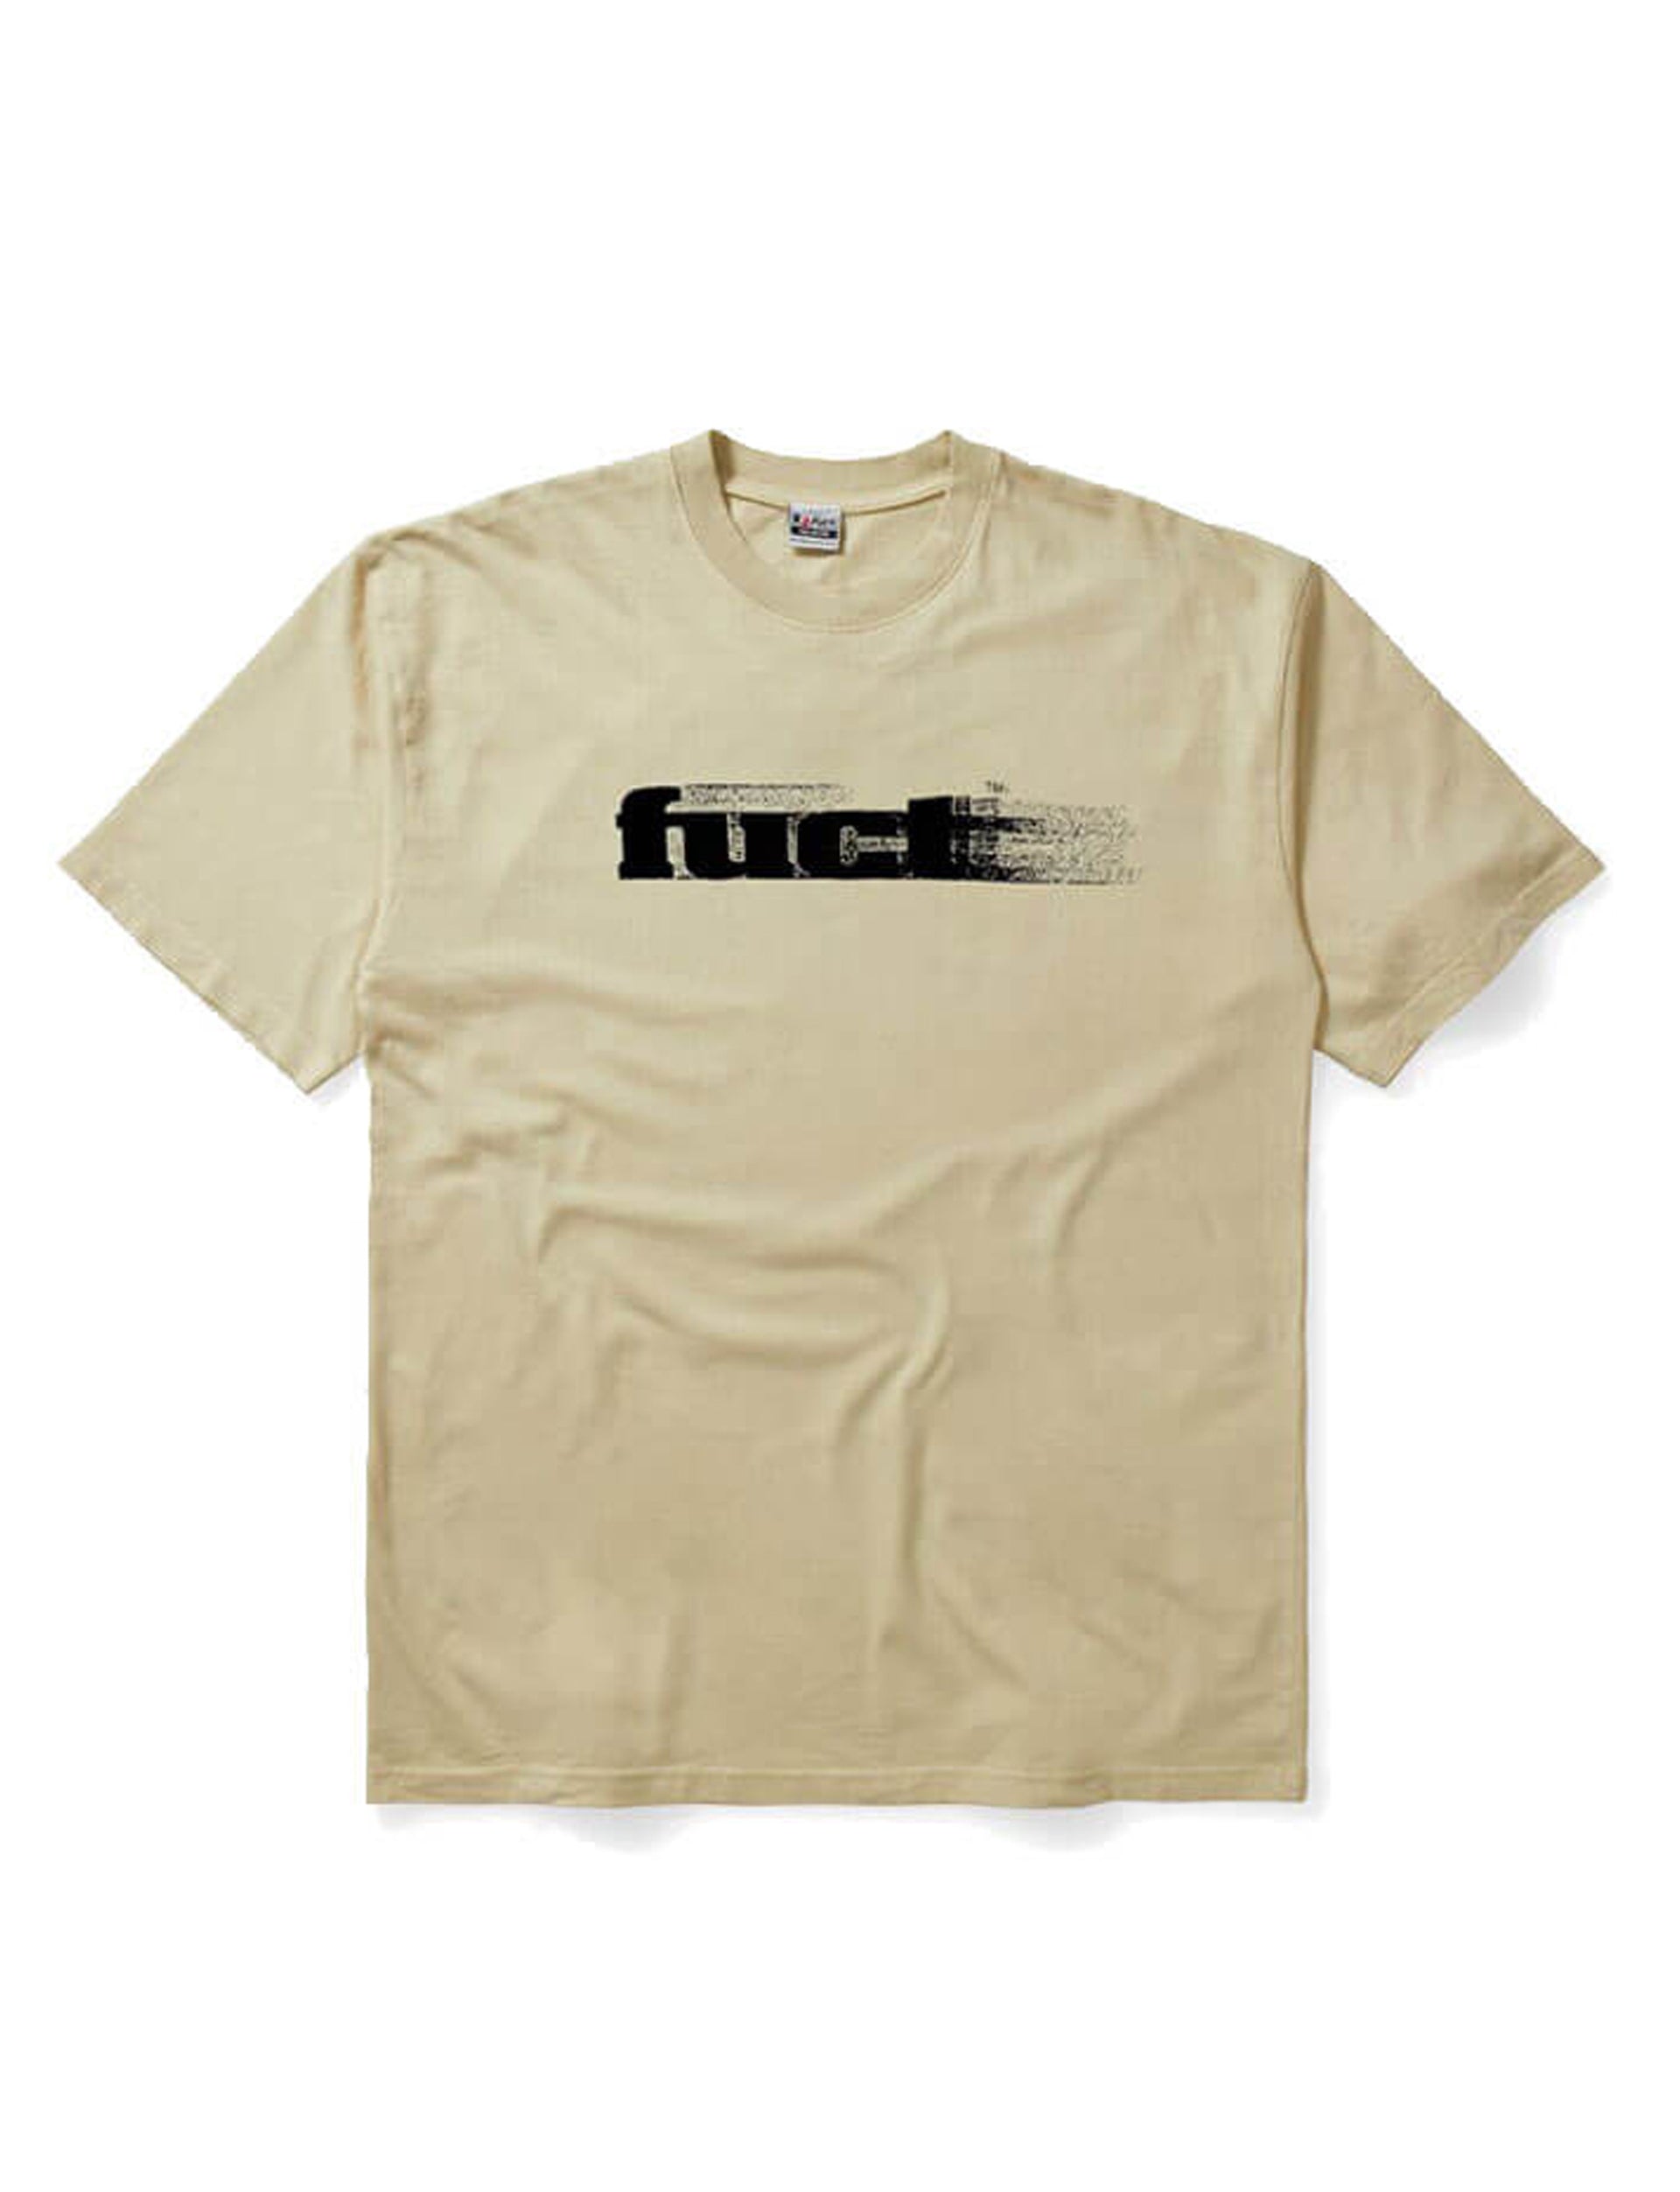 FUCT Og Blurred Logo SAND